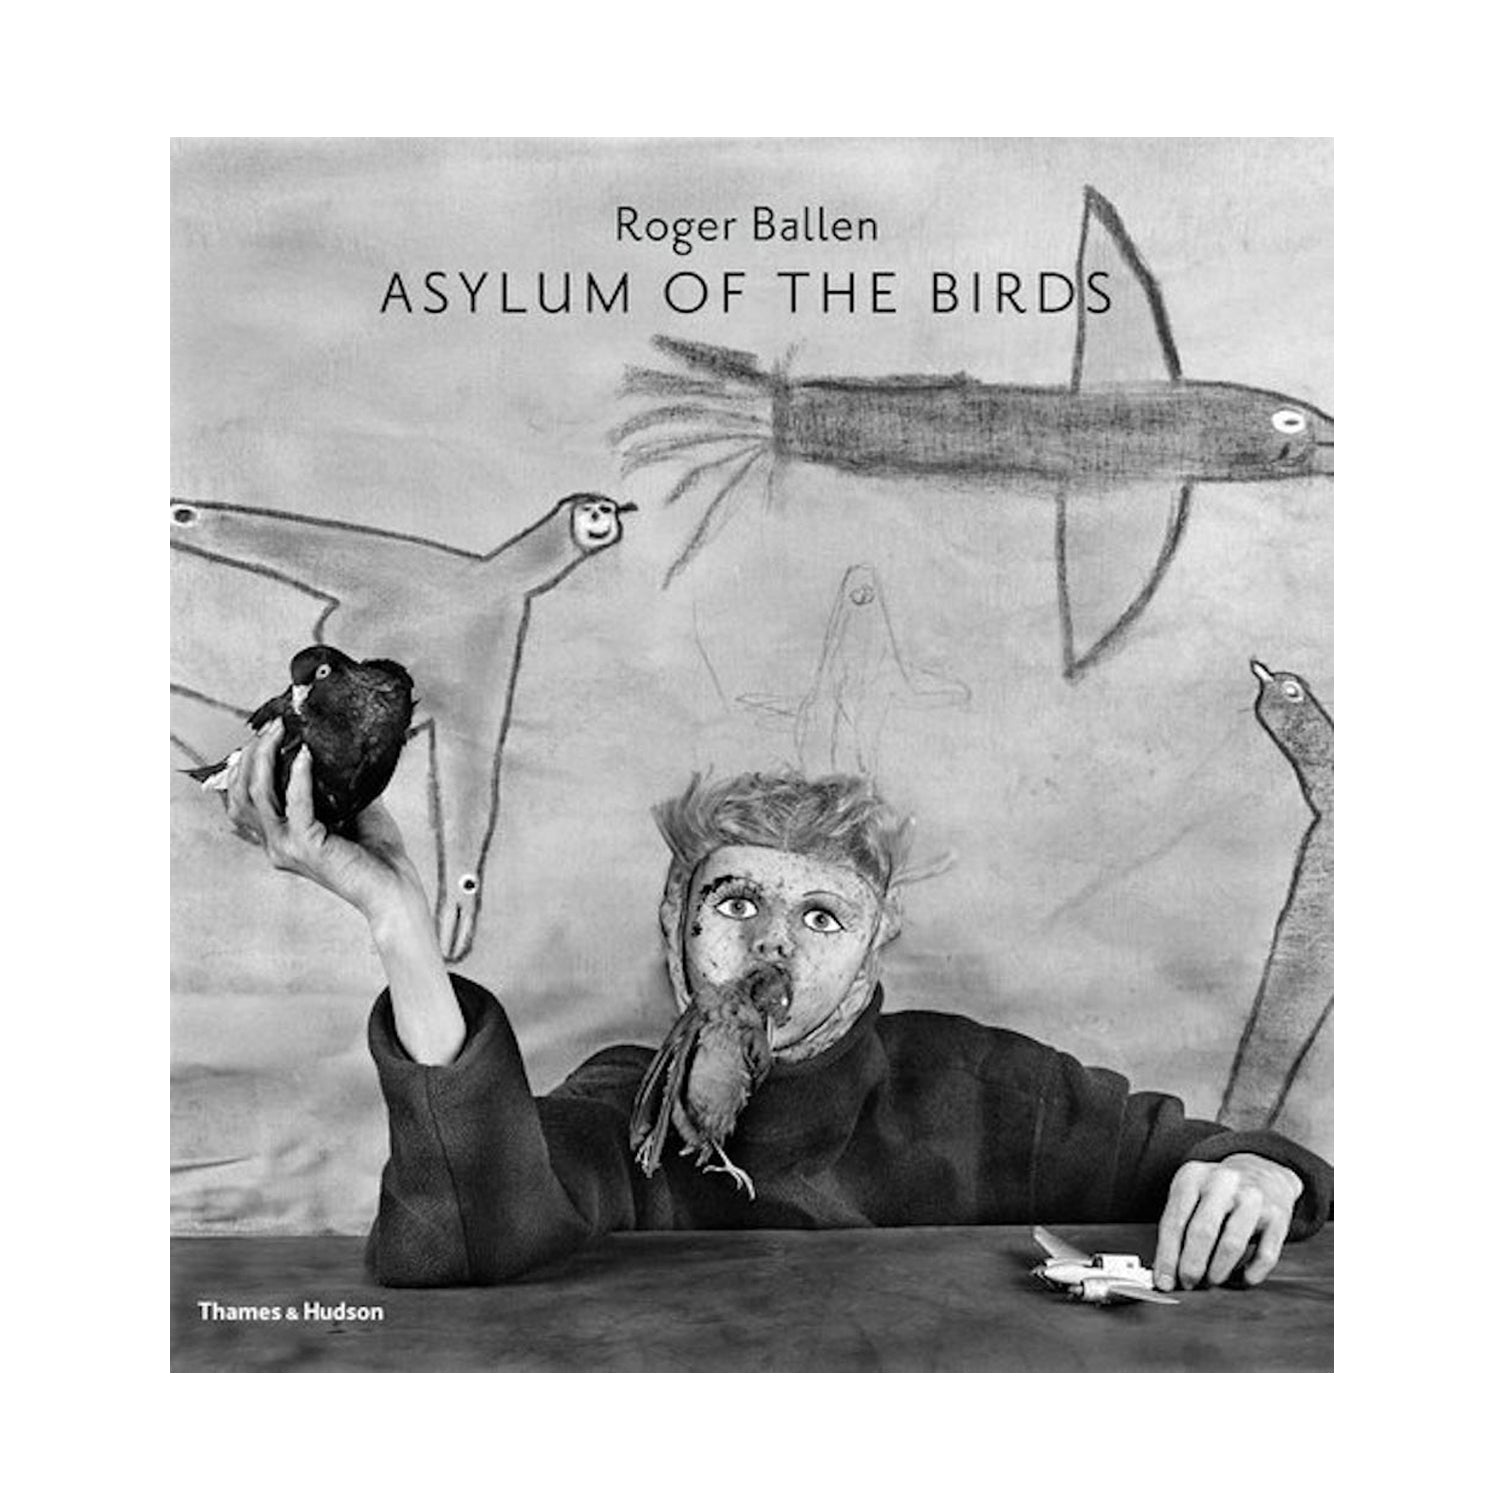 Asylum of the Birds by Roger Ballen Photo Museum Ireland